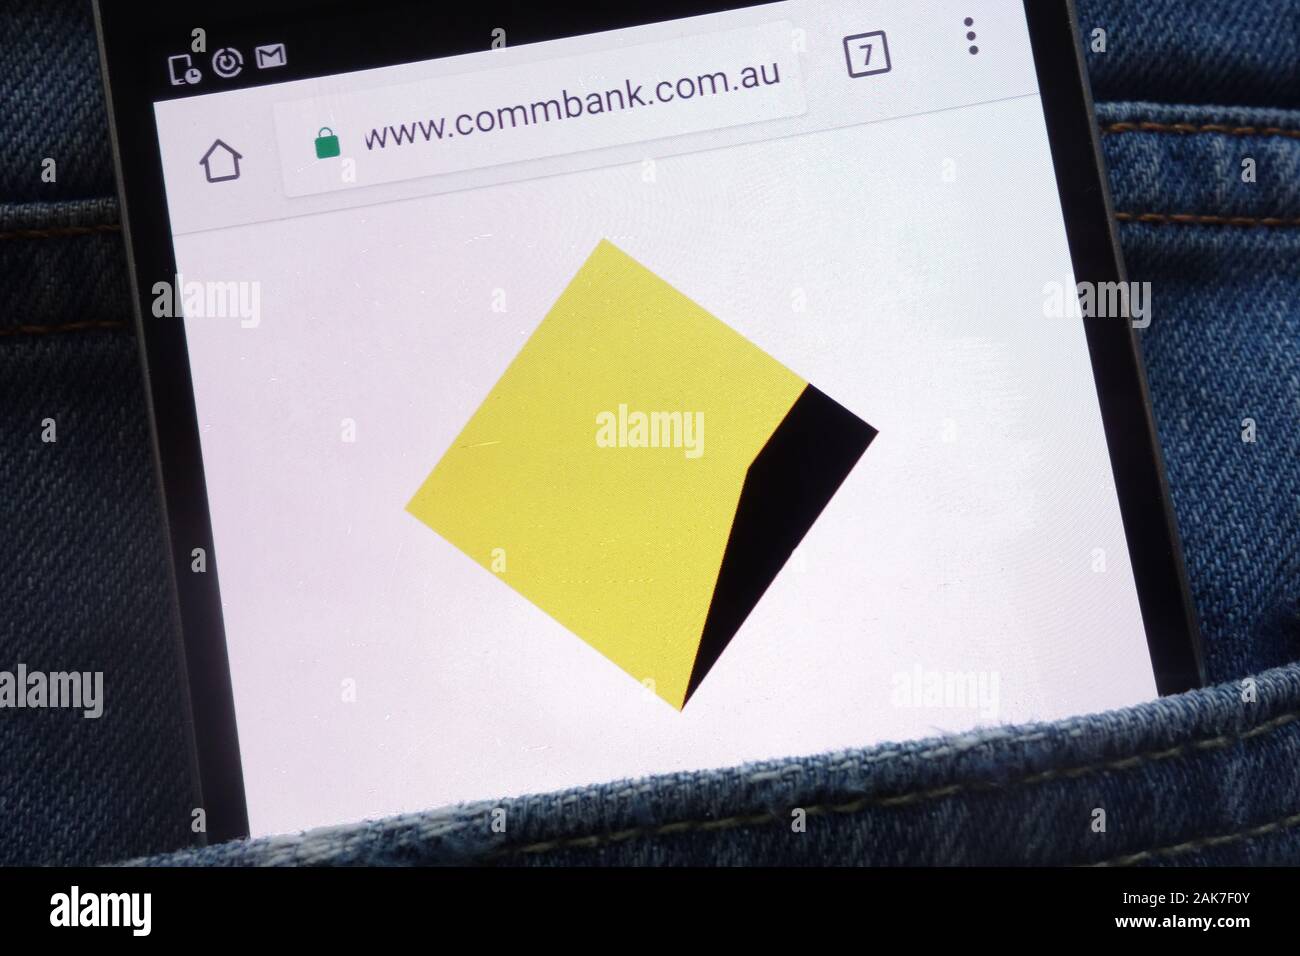 Commonwealth Bank of Australia website displayed on smartphone hidden in jeans pocket Stock Photo